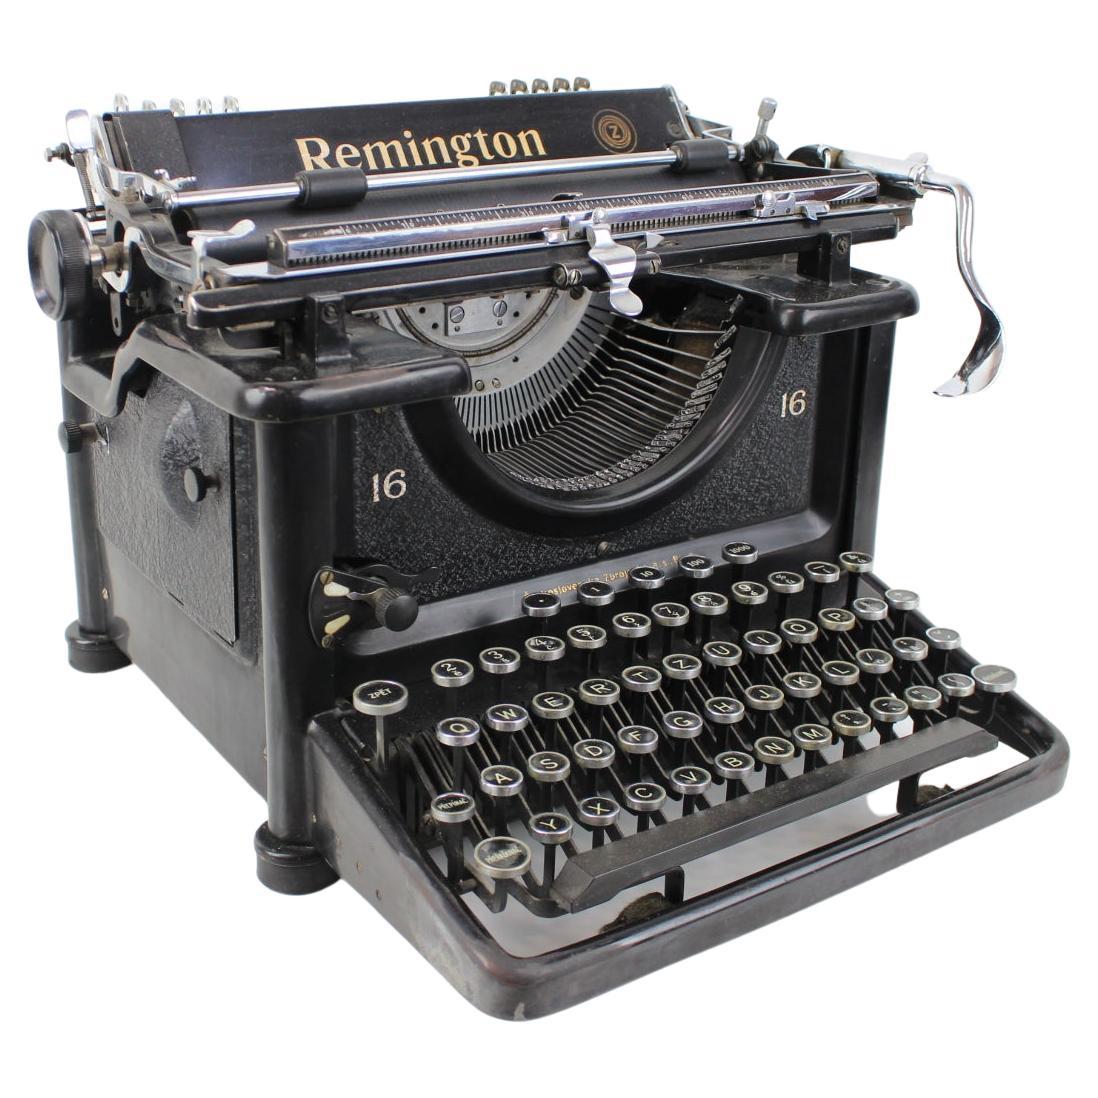 Type-writer, fabricant Remington : Zbrojovka Brno, vers 1935